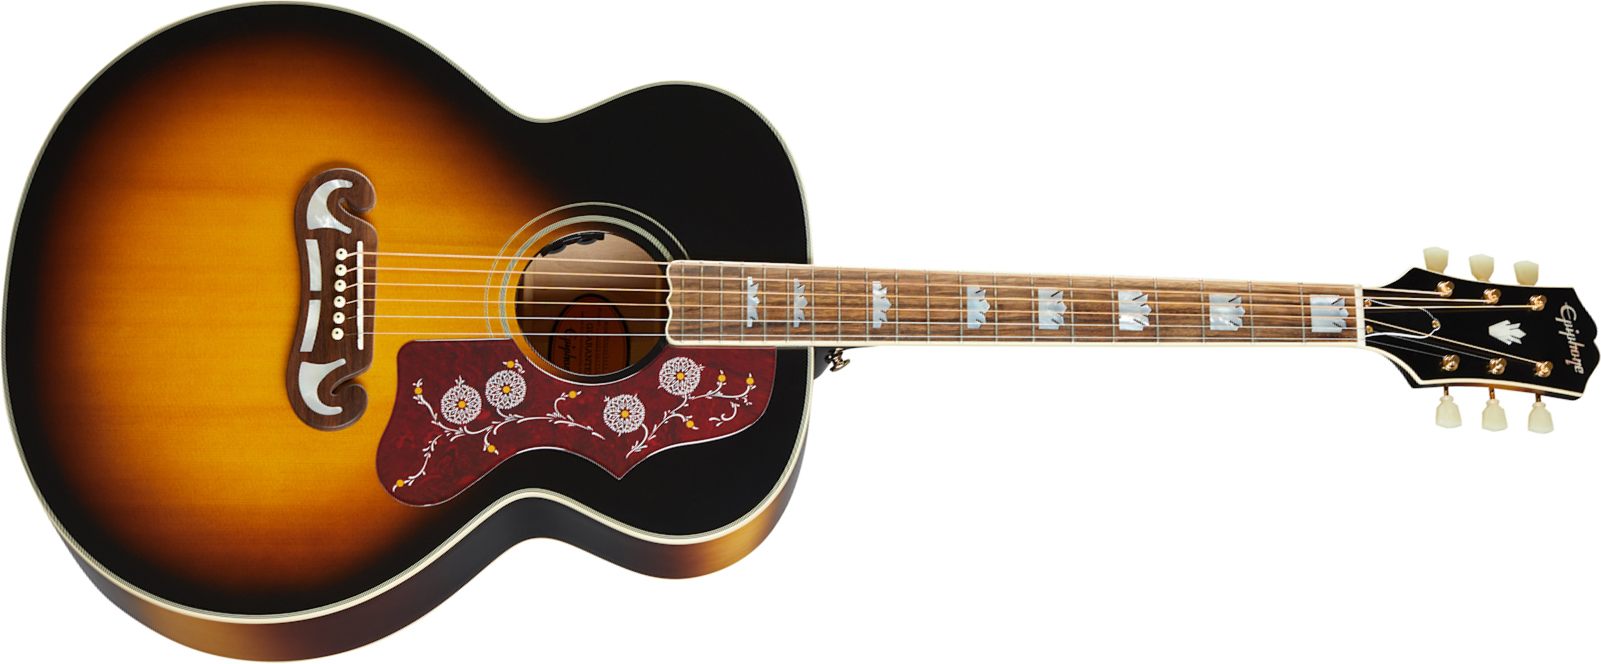 Epiphone J-200 Inspired By Gibson Jumbo Epicea Erable Lau - Aged Vintage Sunburst - Electro acoustic guitar - Main picture